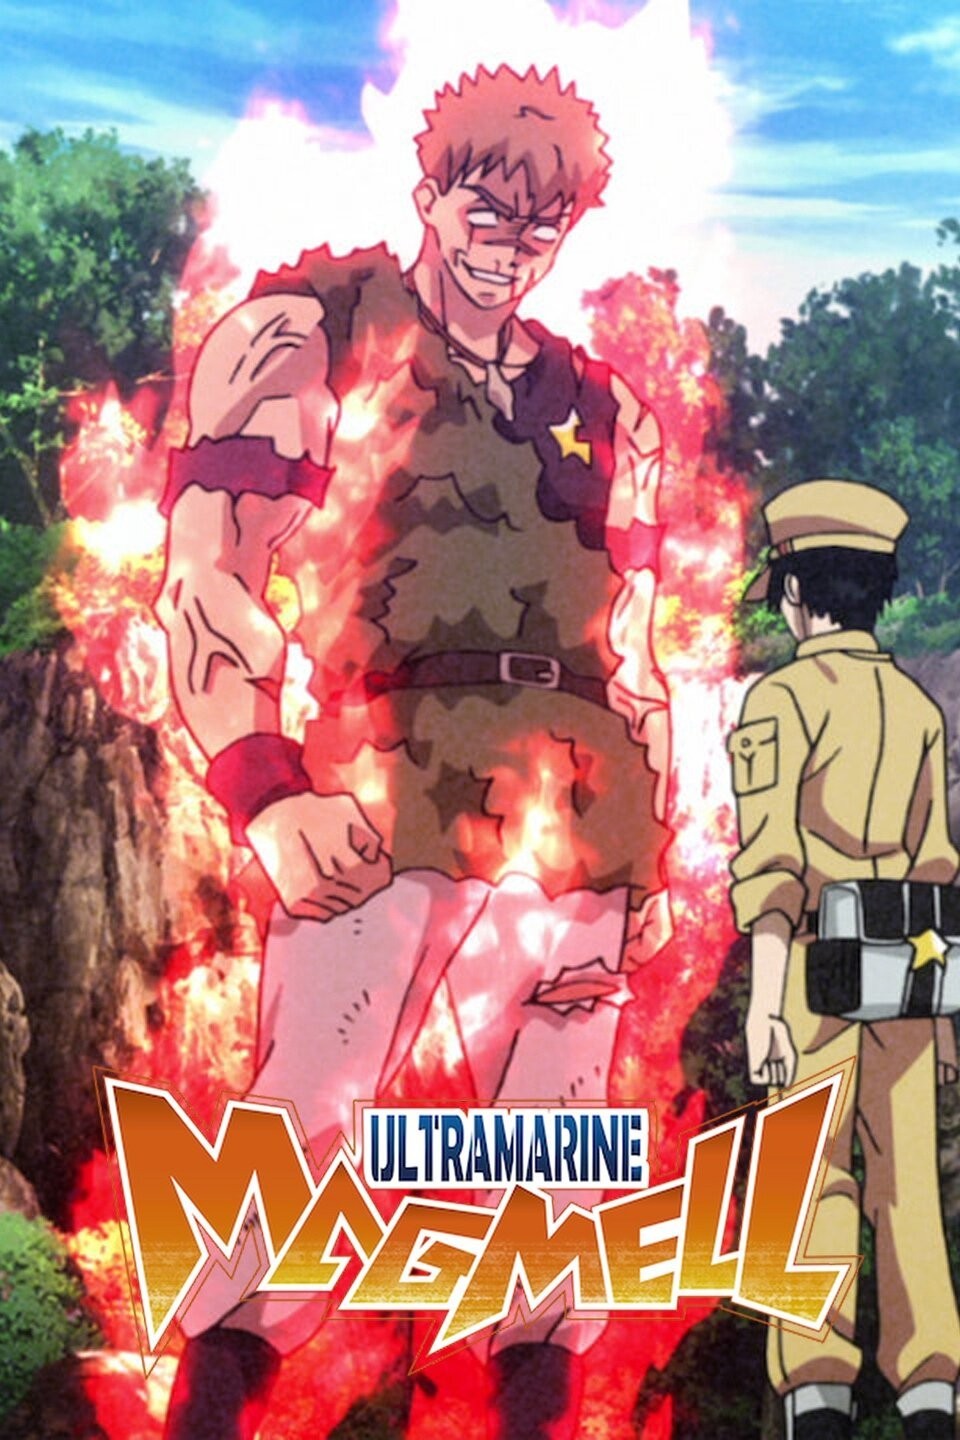 Ultramarine Magmell Review: A Fresh New Anime